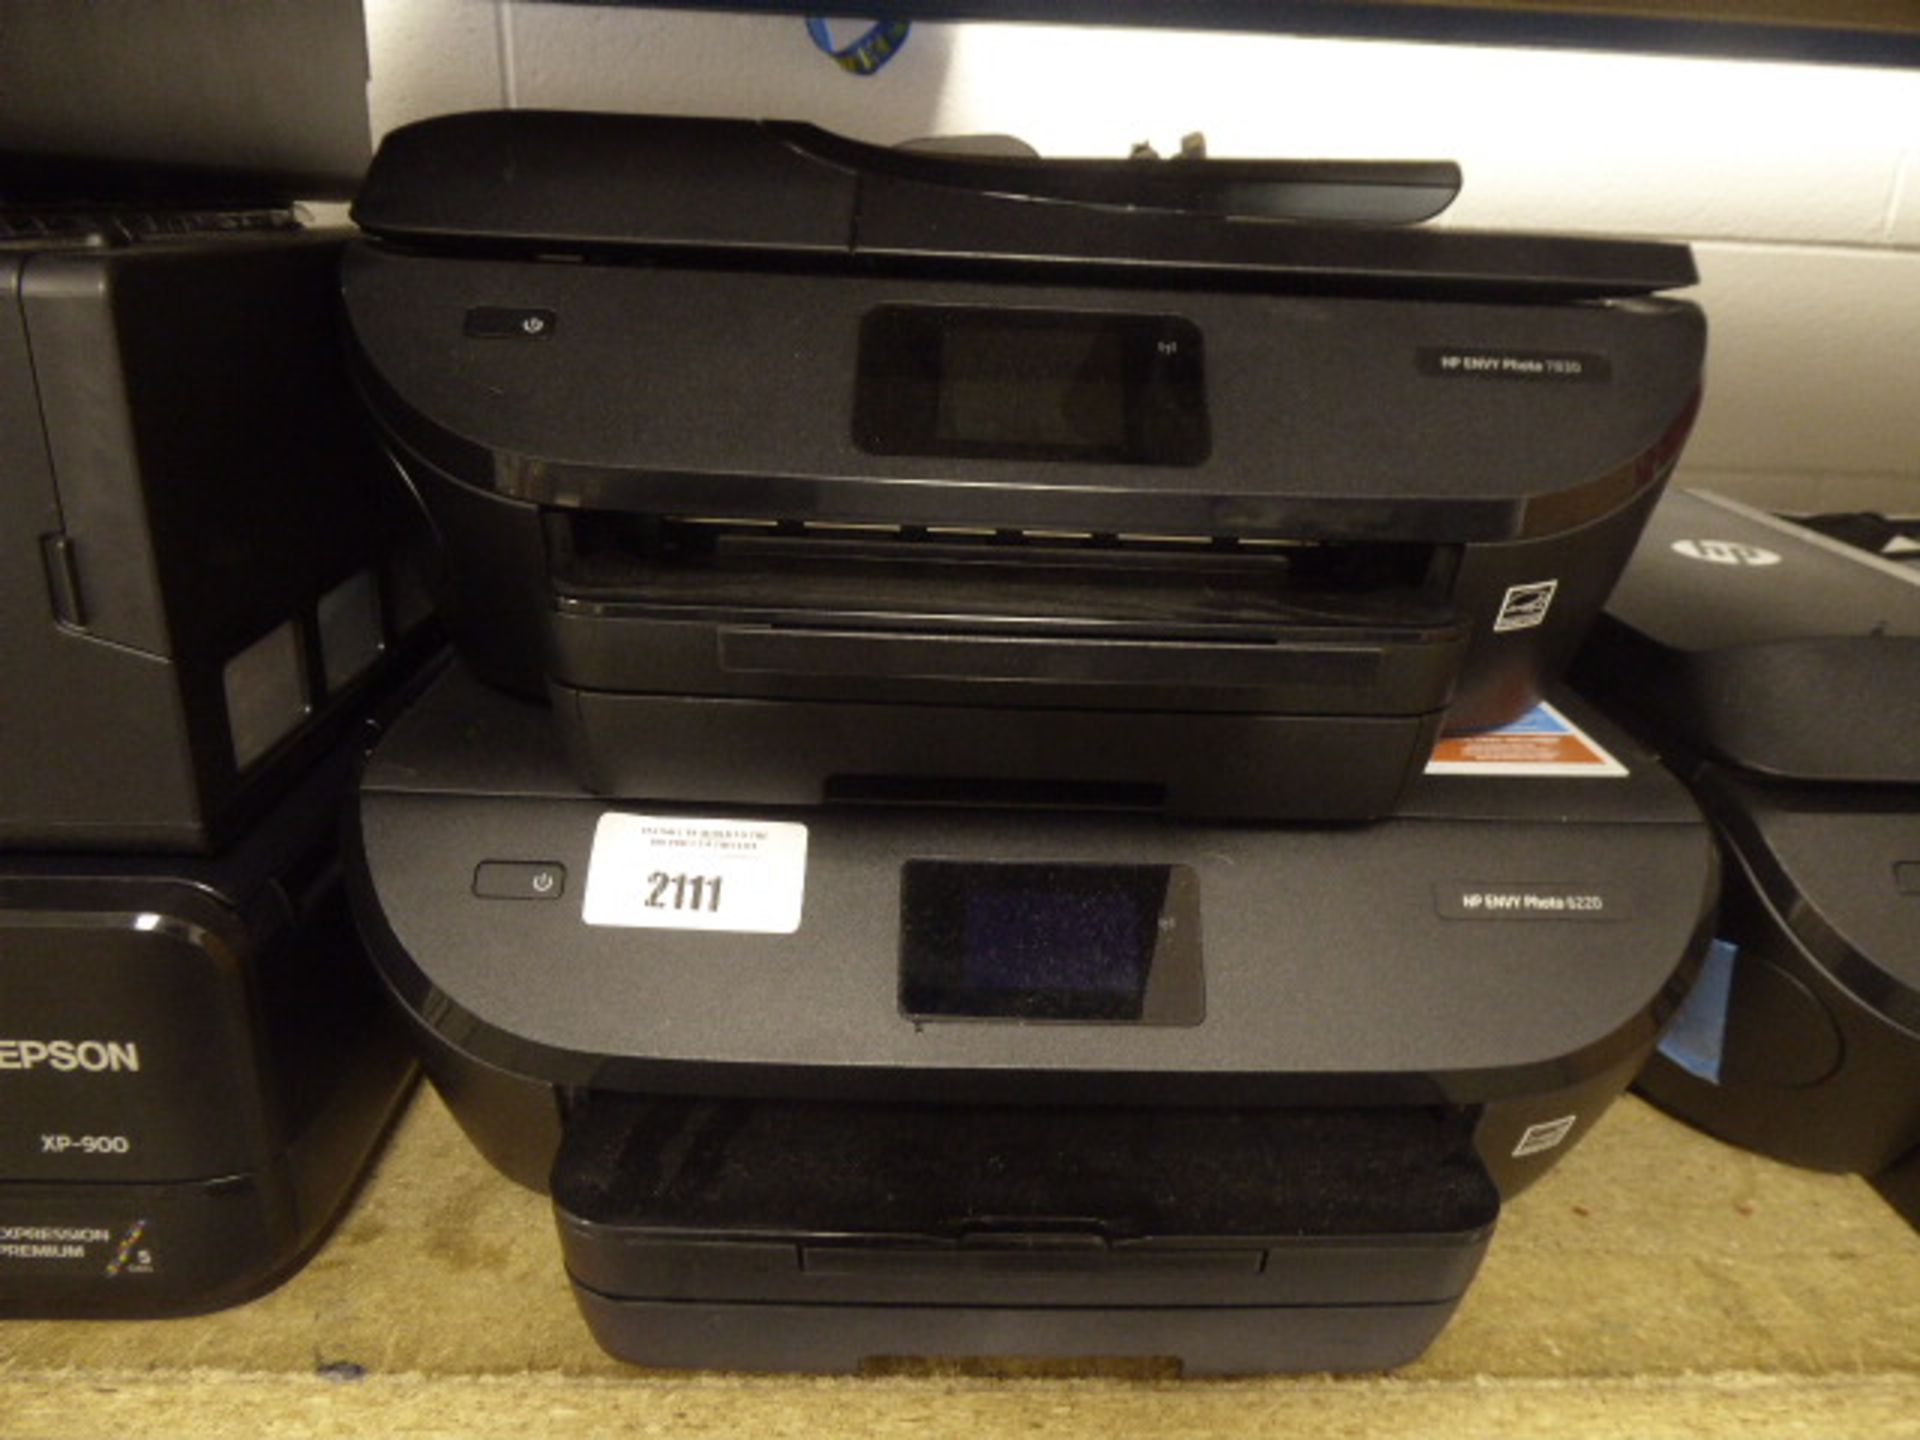 3 HP Envy photo printers models 7830 and 6220 - Image 2 of 3